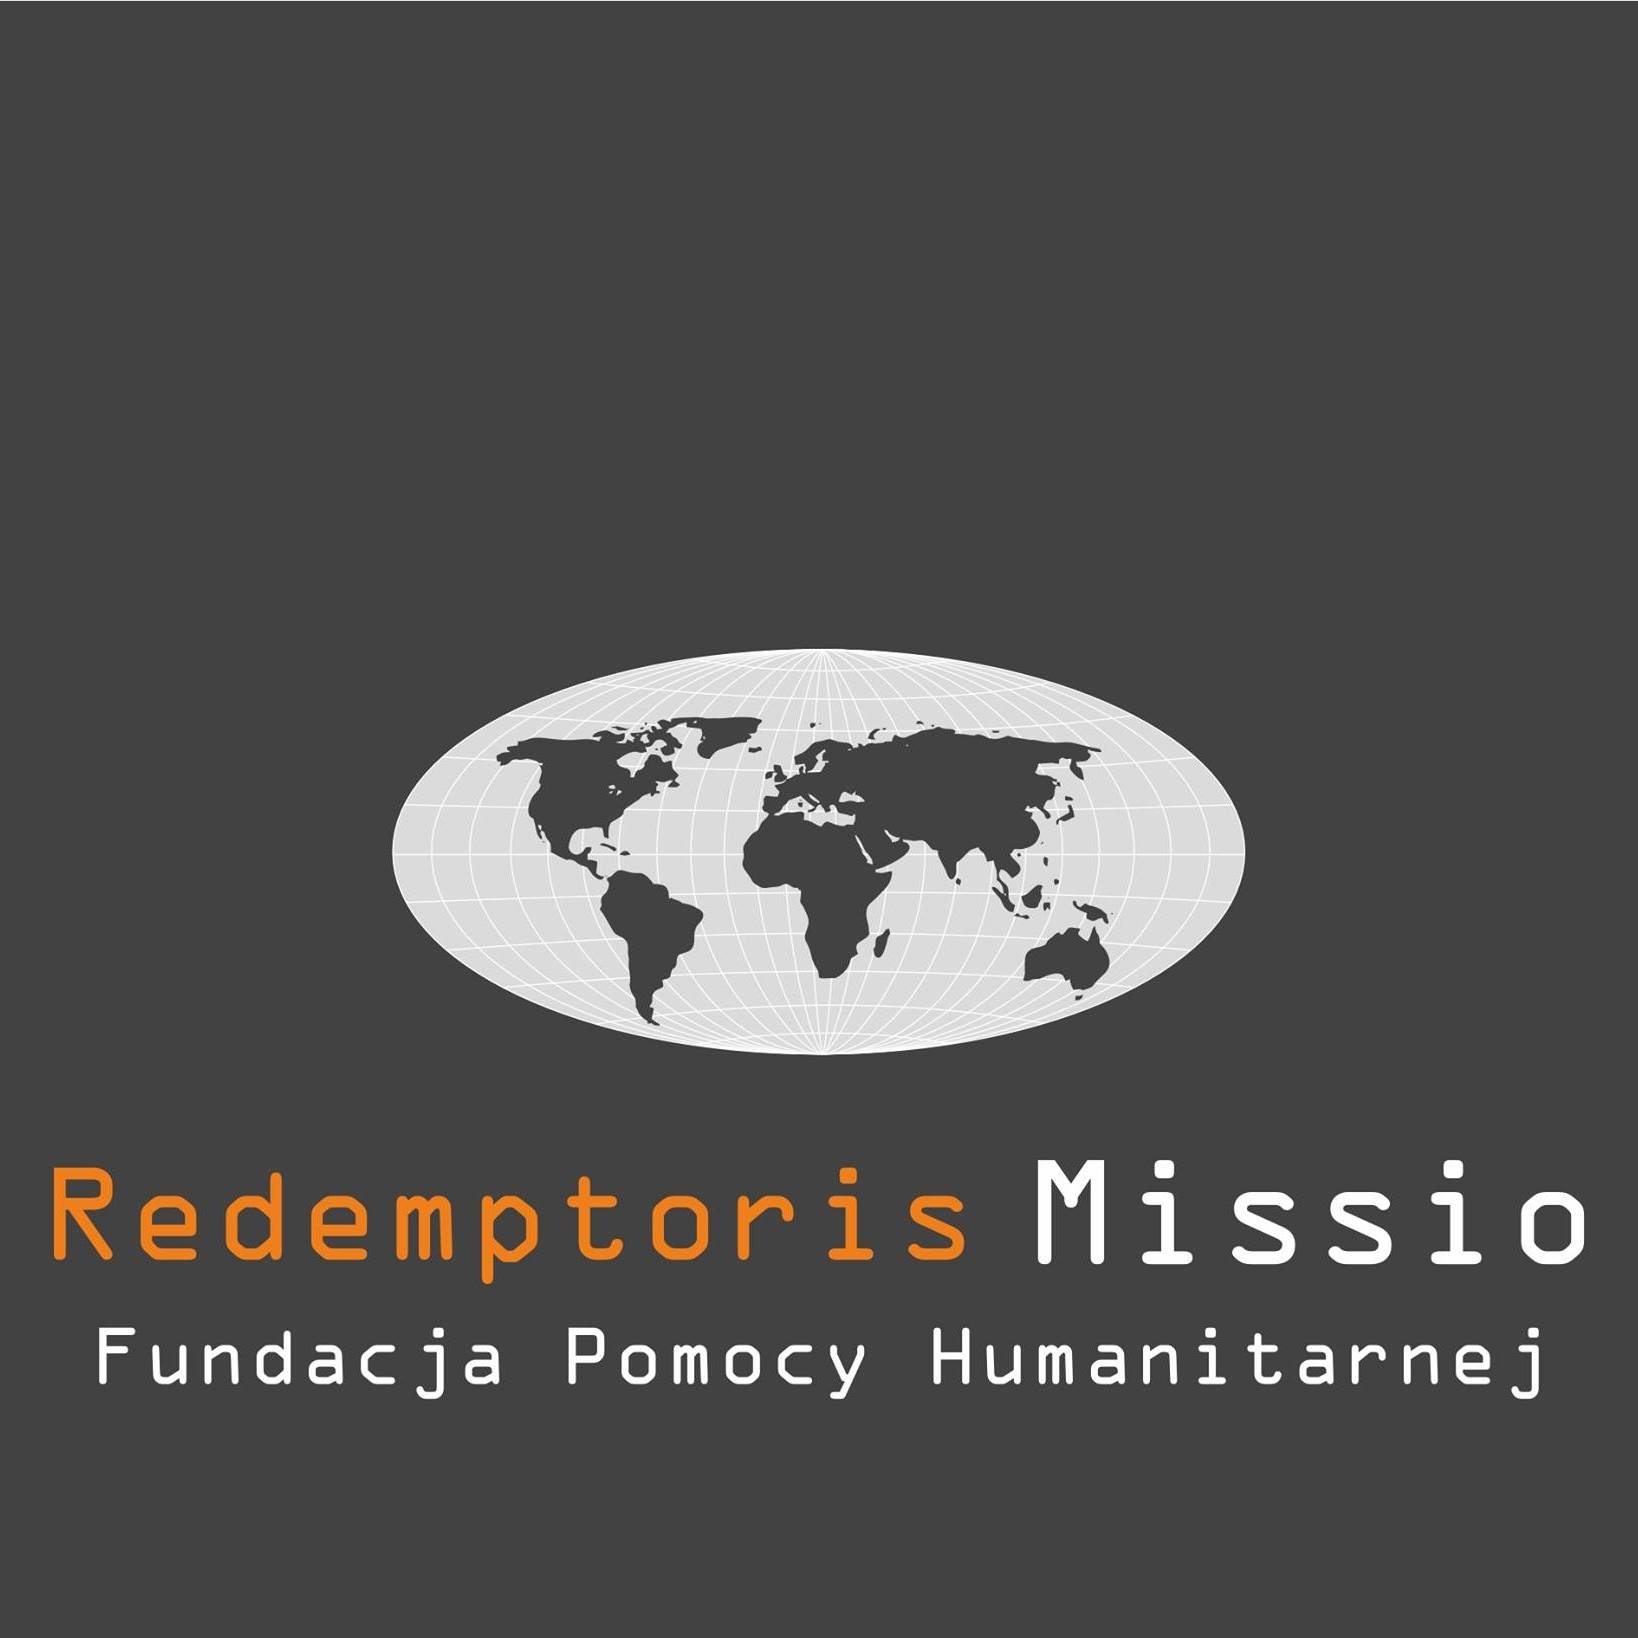 Fundacja Redemptoris Missio